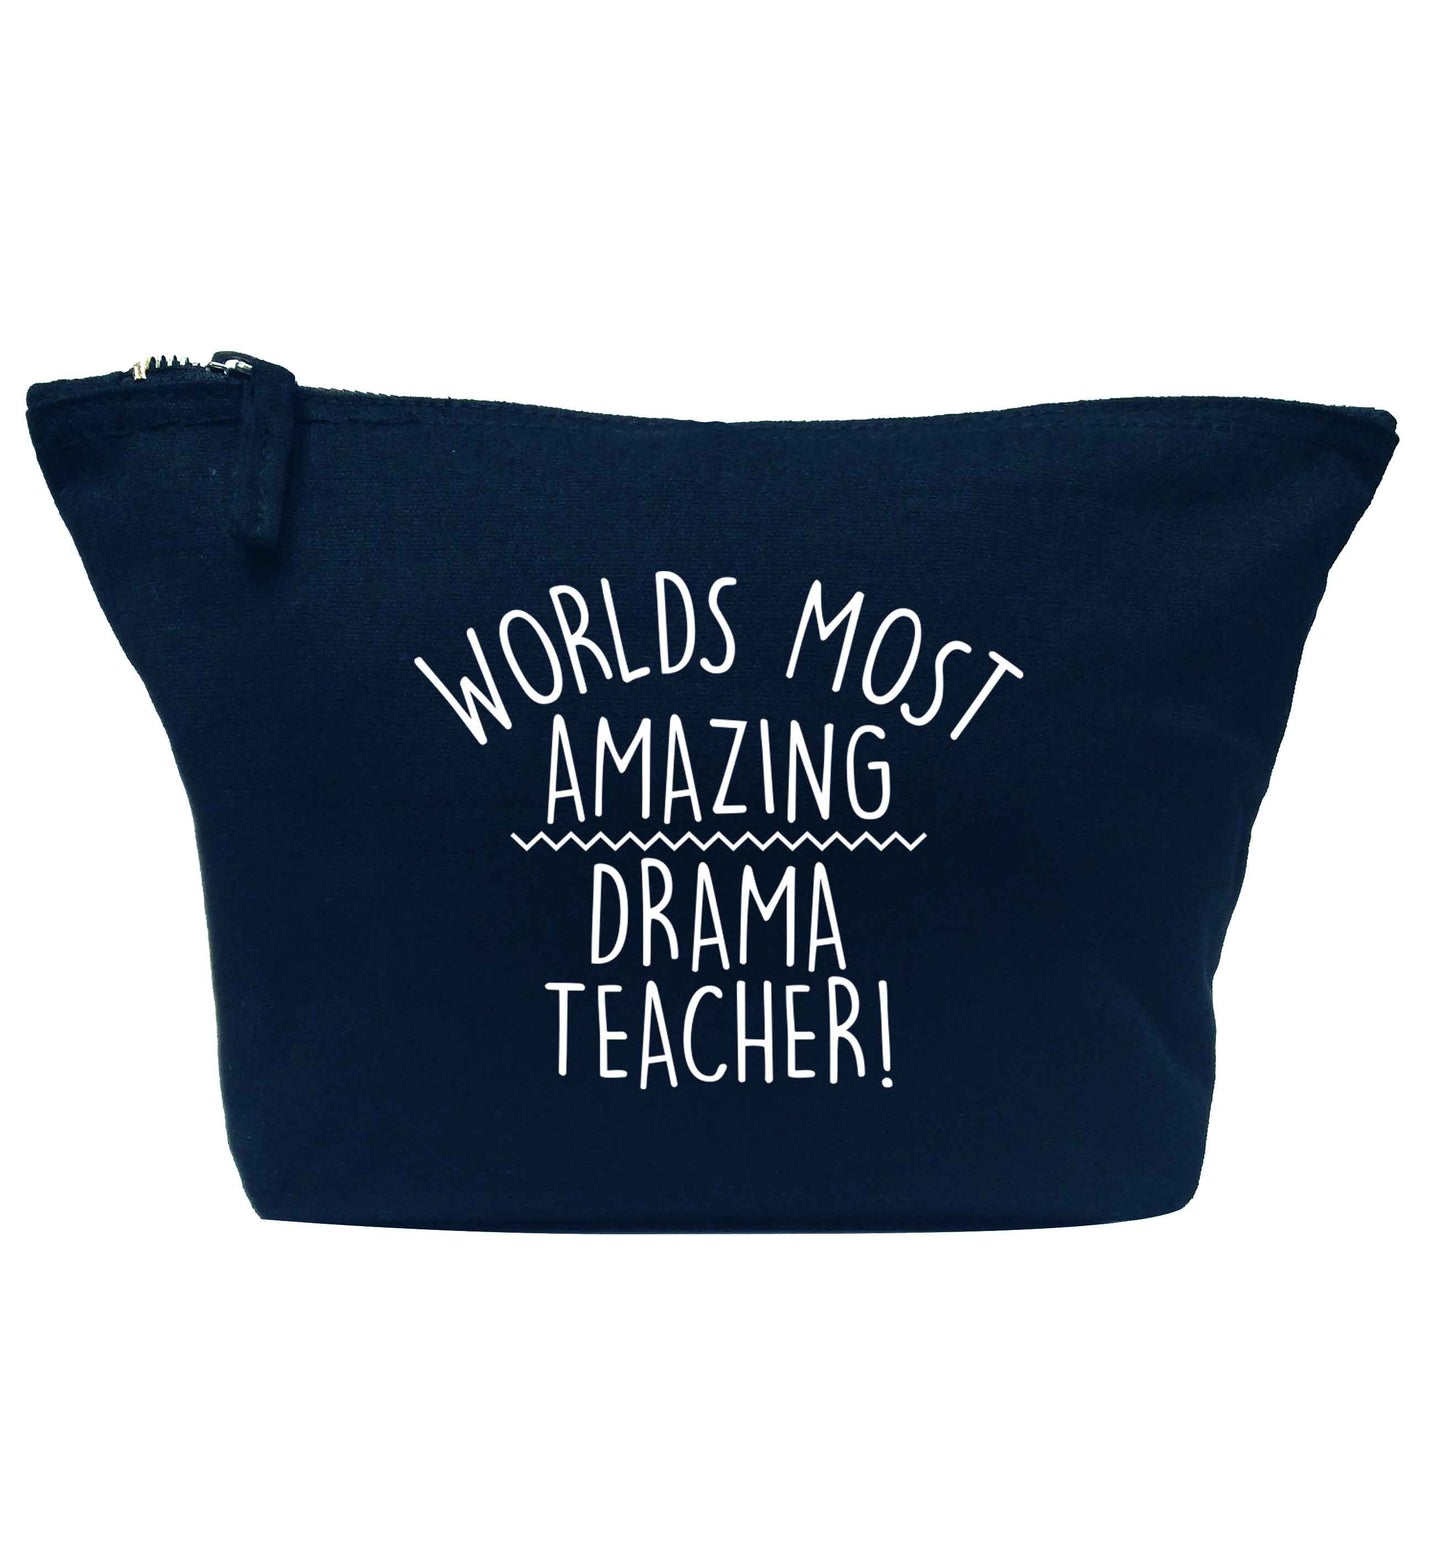 Worlds most amazing drama teacher navy makeup bag